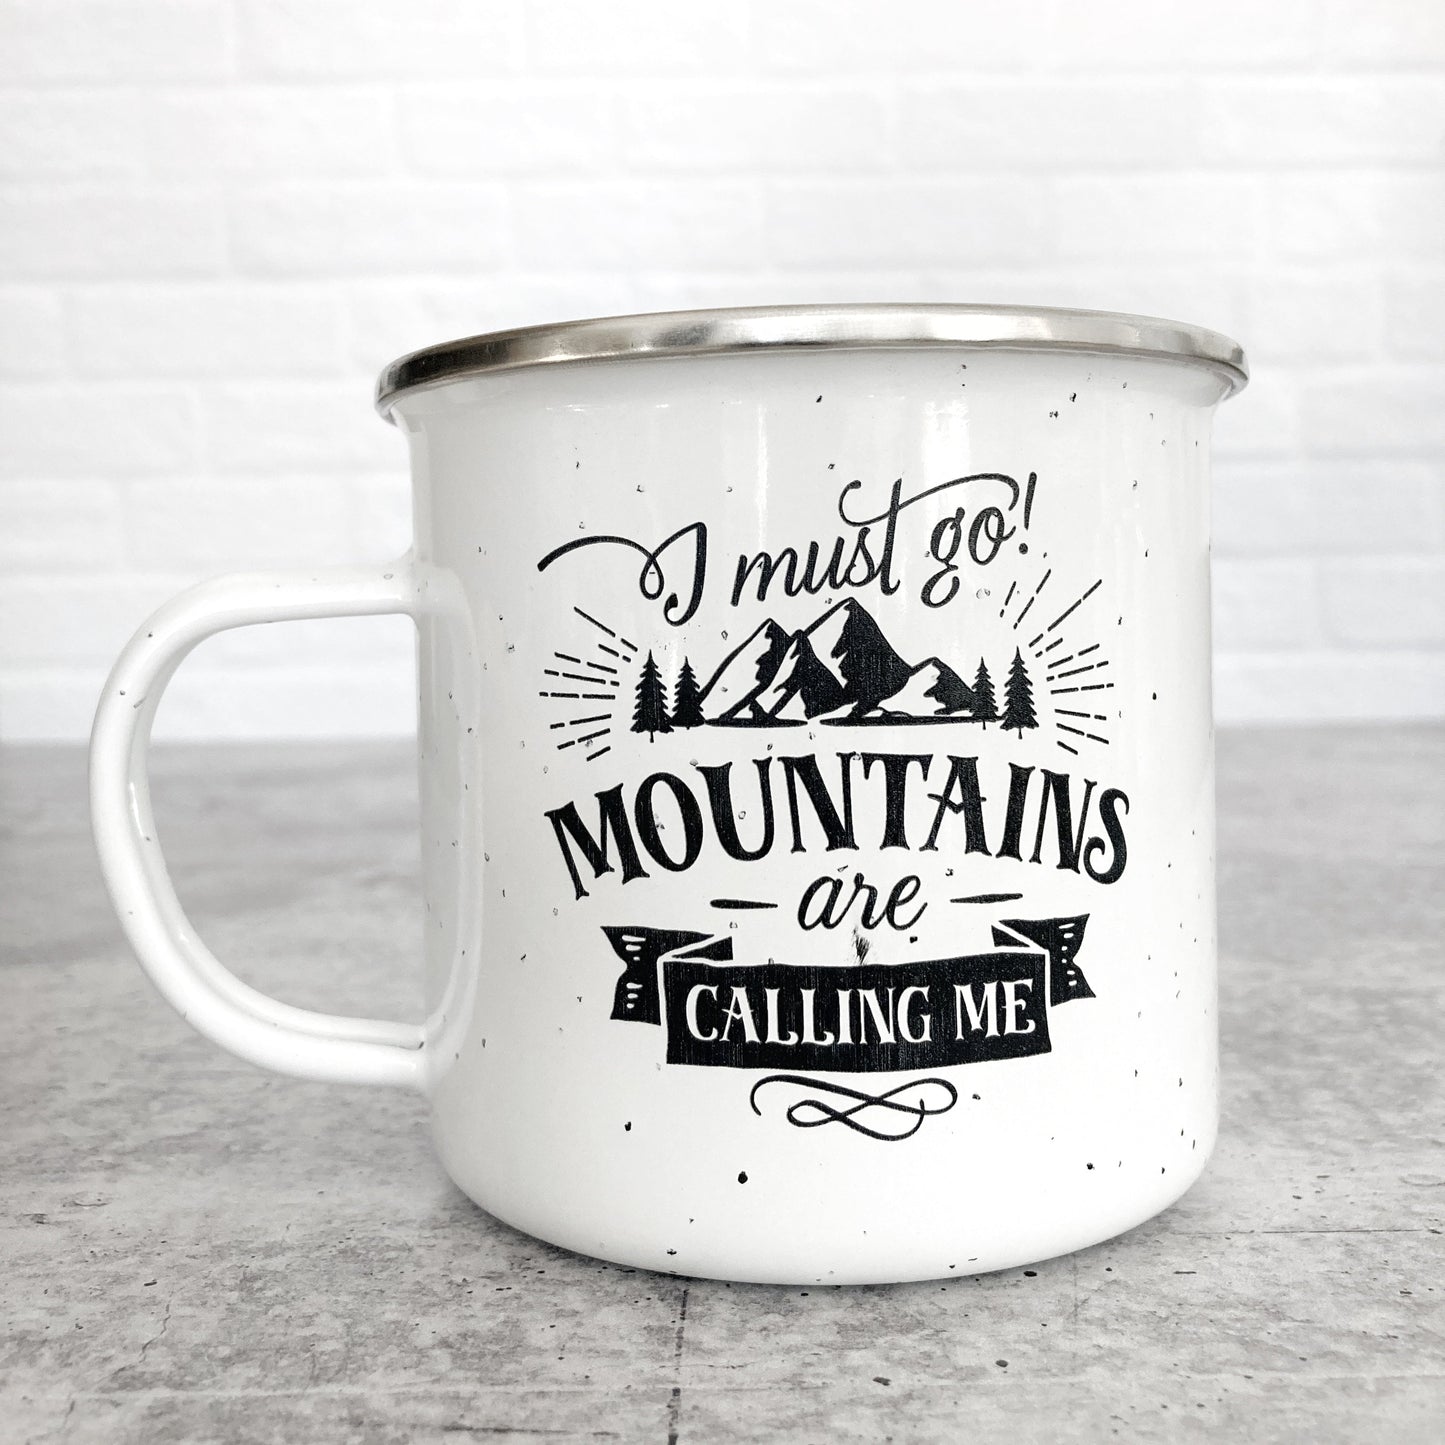 I Must Go! Mountains Are Calling Me design on a white enamel mug